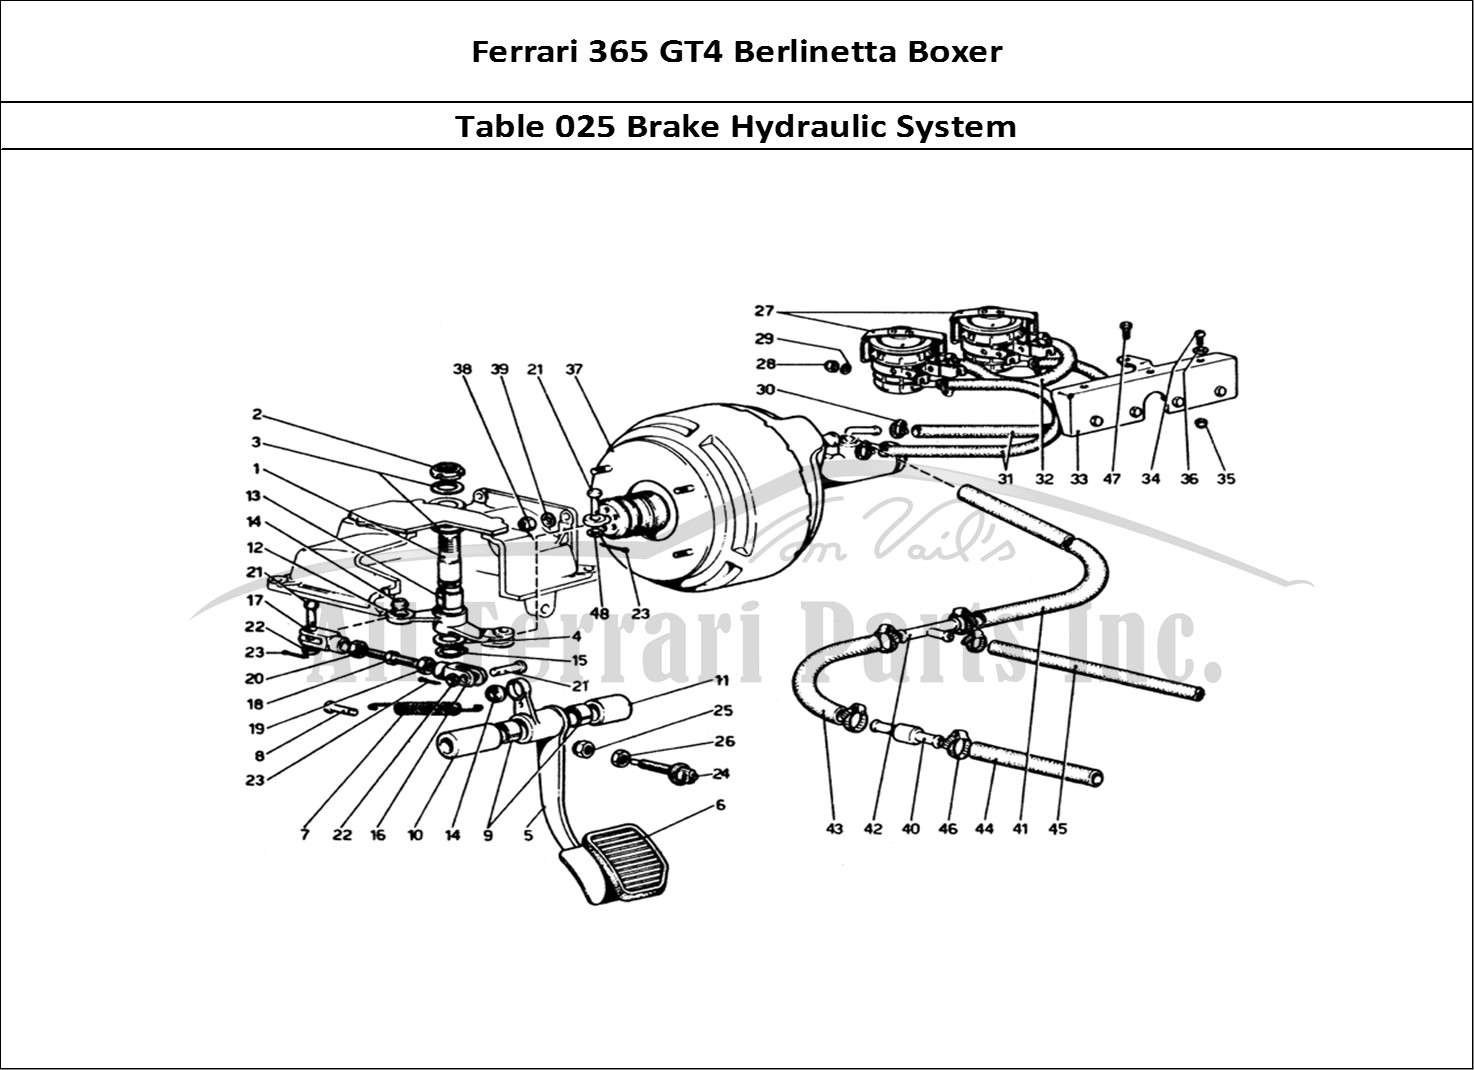 Ferrari Parts Ferrari 365 GT4 Berlinetta Boxer Page 025 Brake Hydraulic System